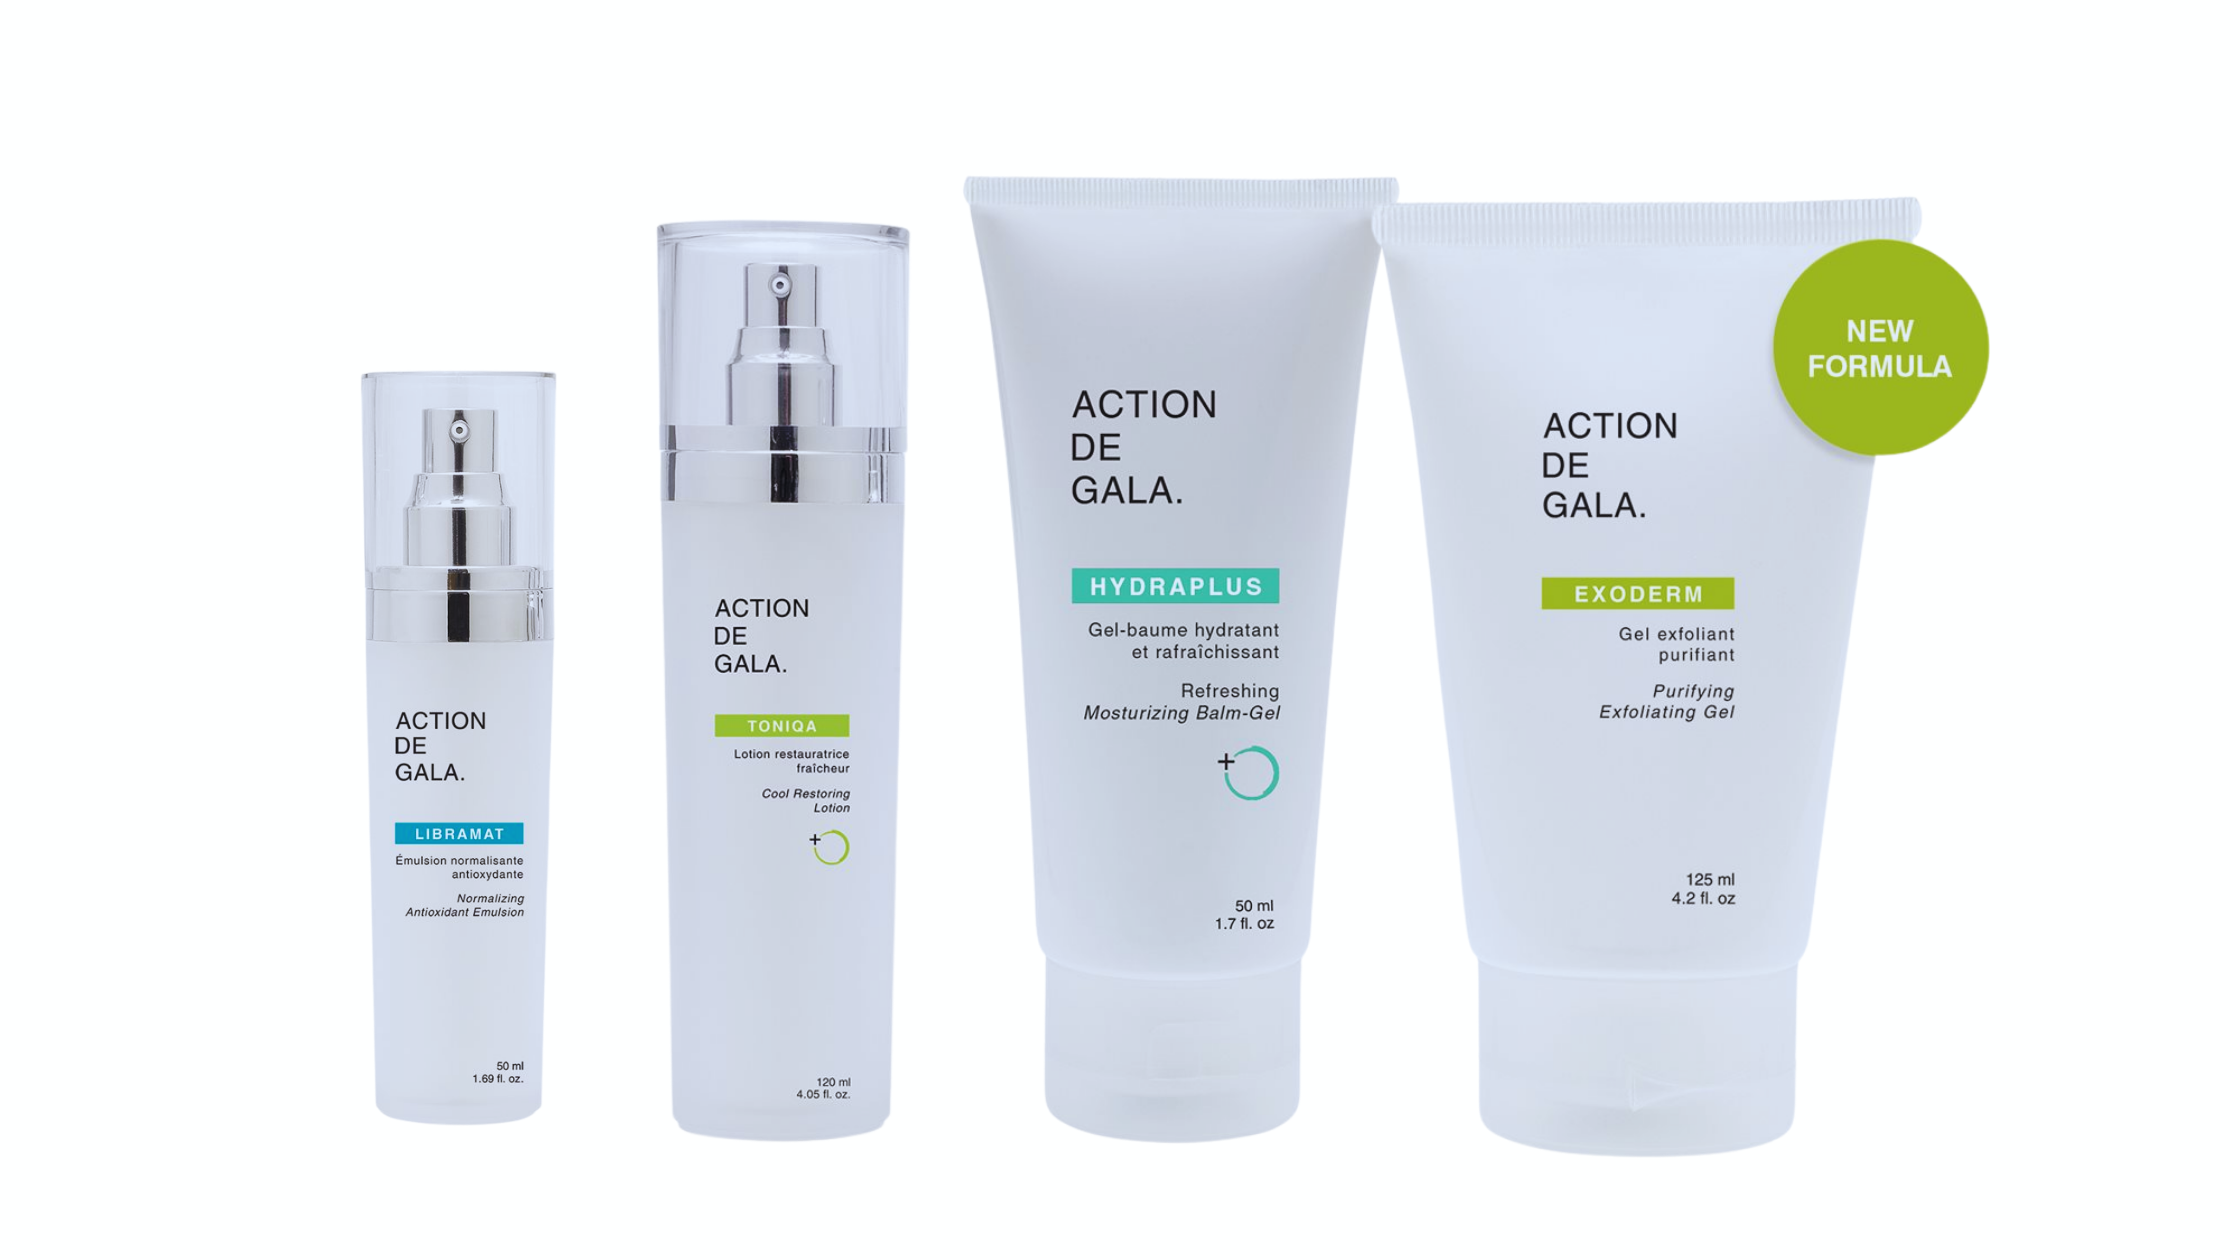 action de gala skin care product line